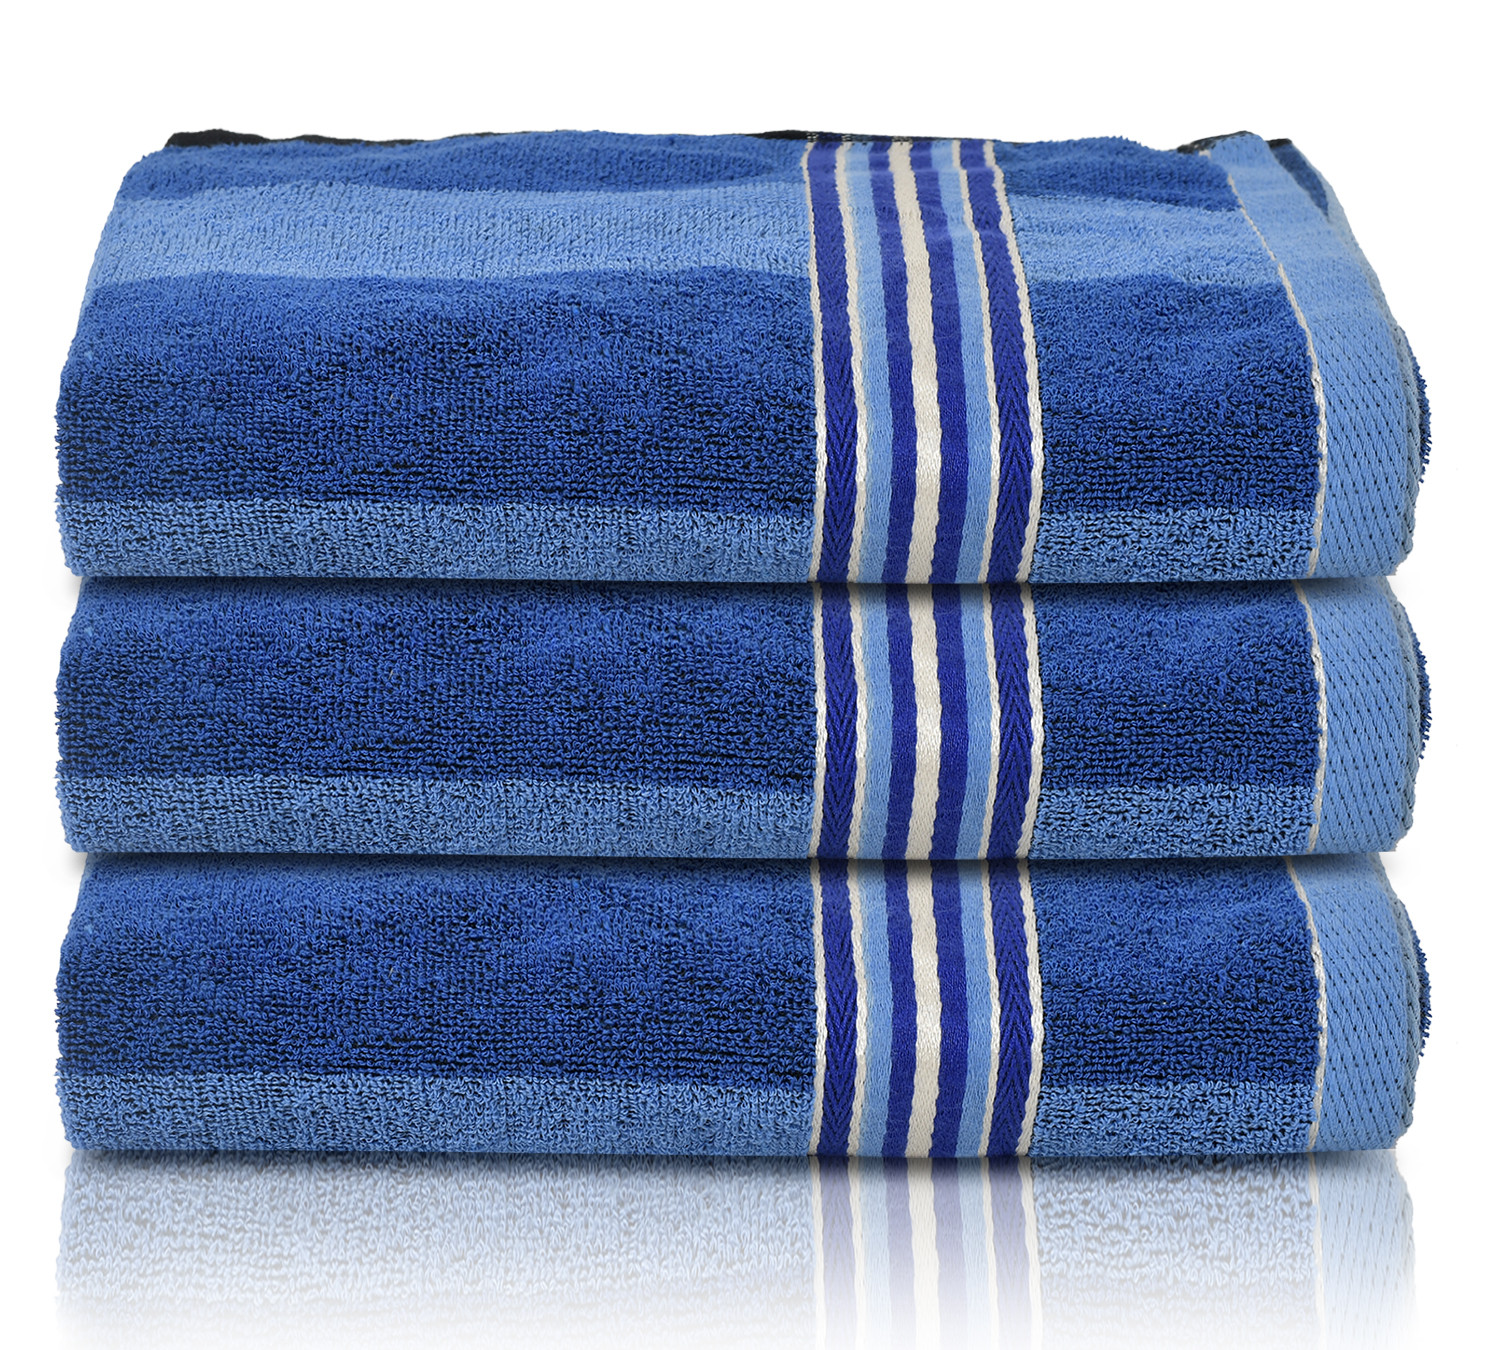 Kuber Industries Lining Design Soft Cotton Bath Towel, 30